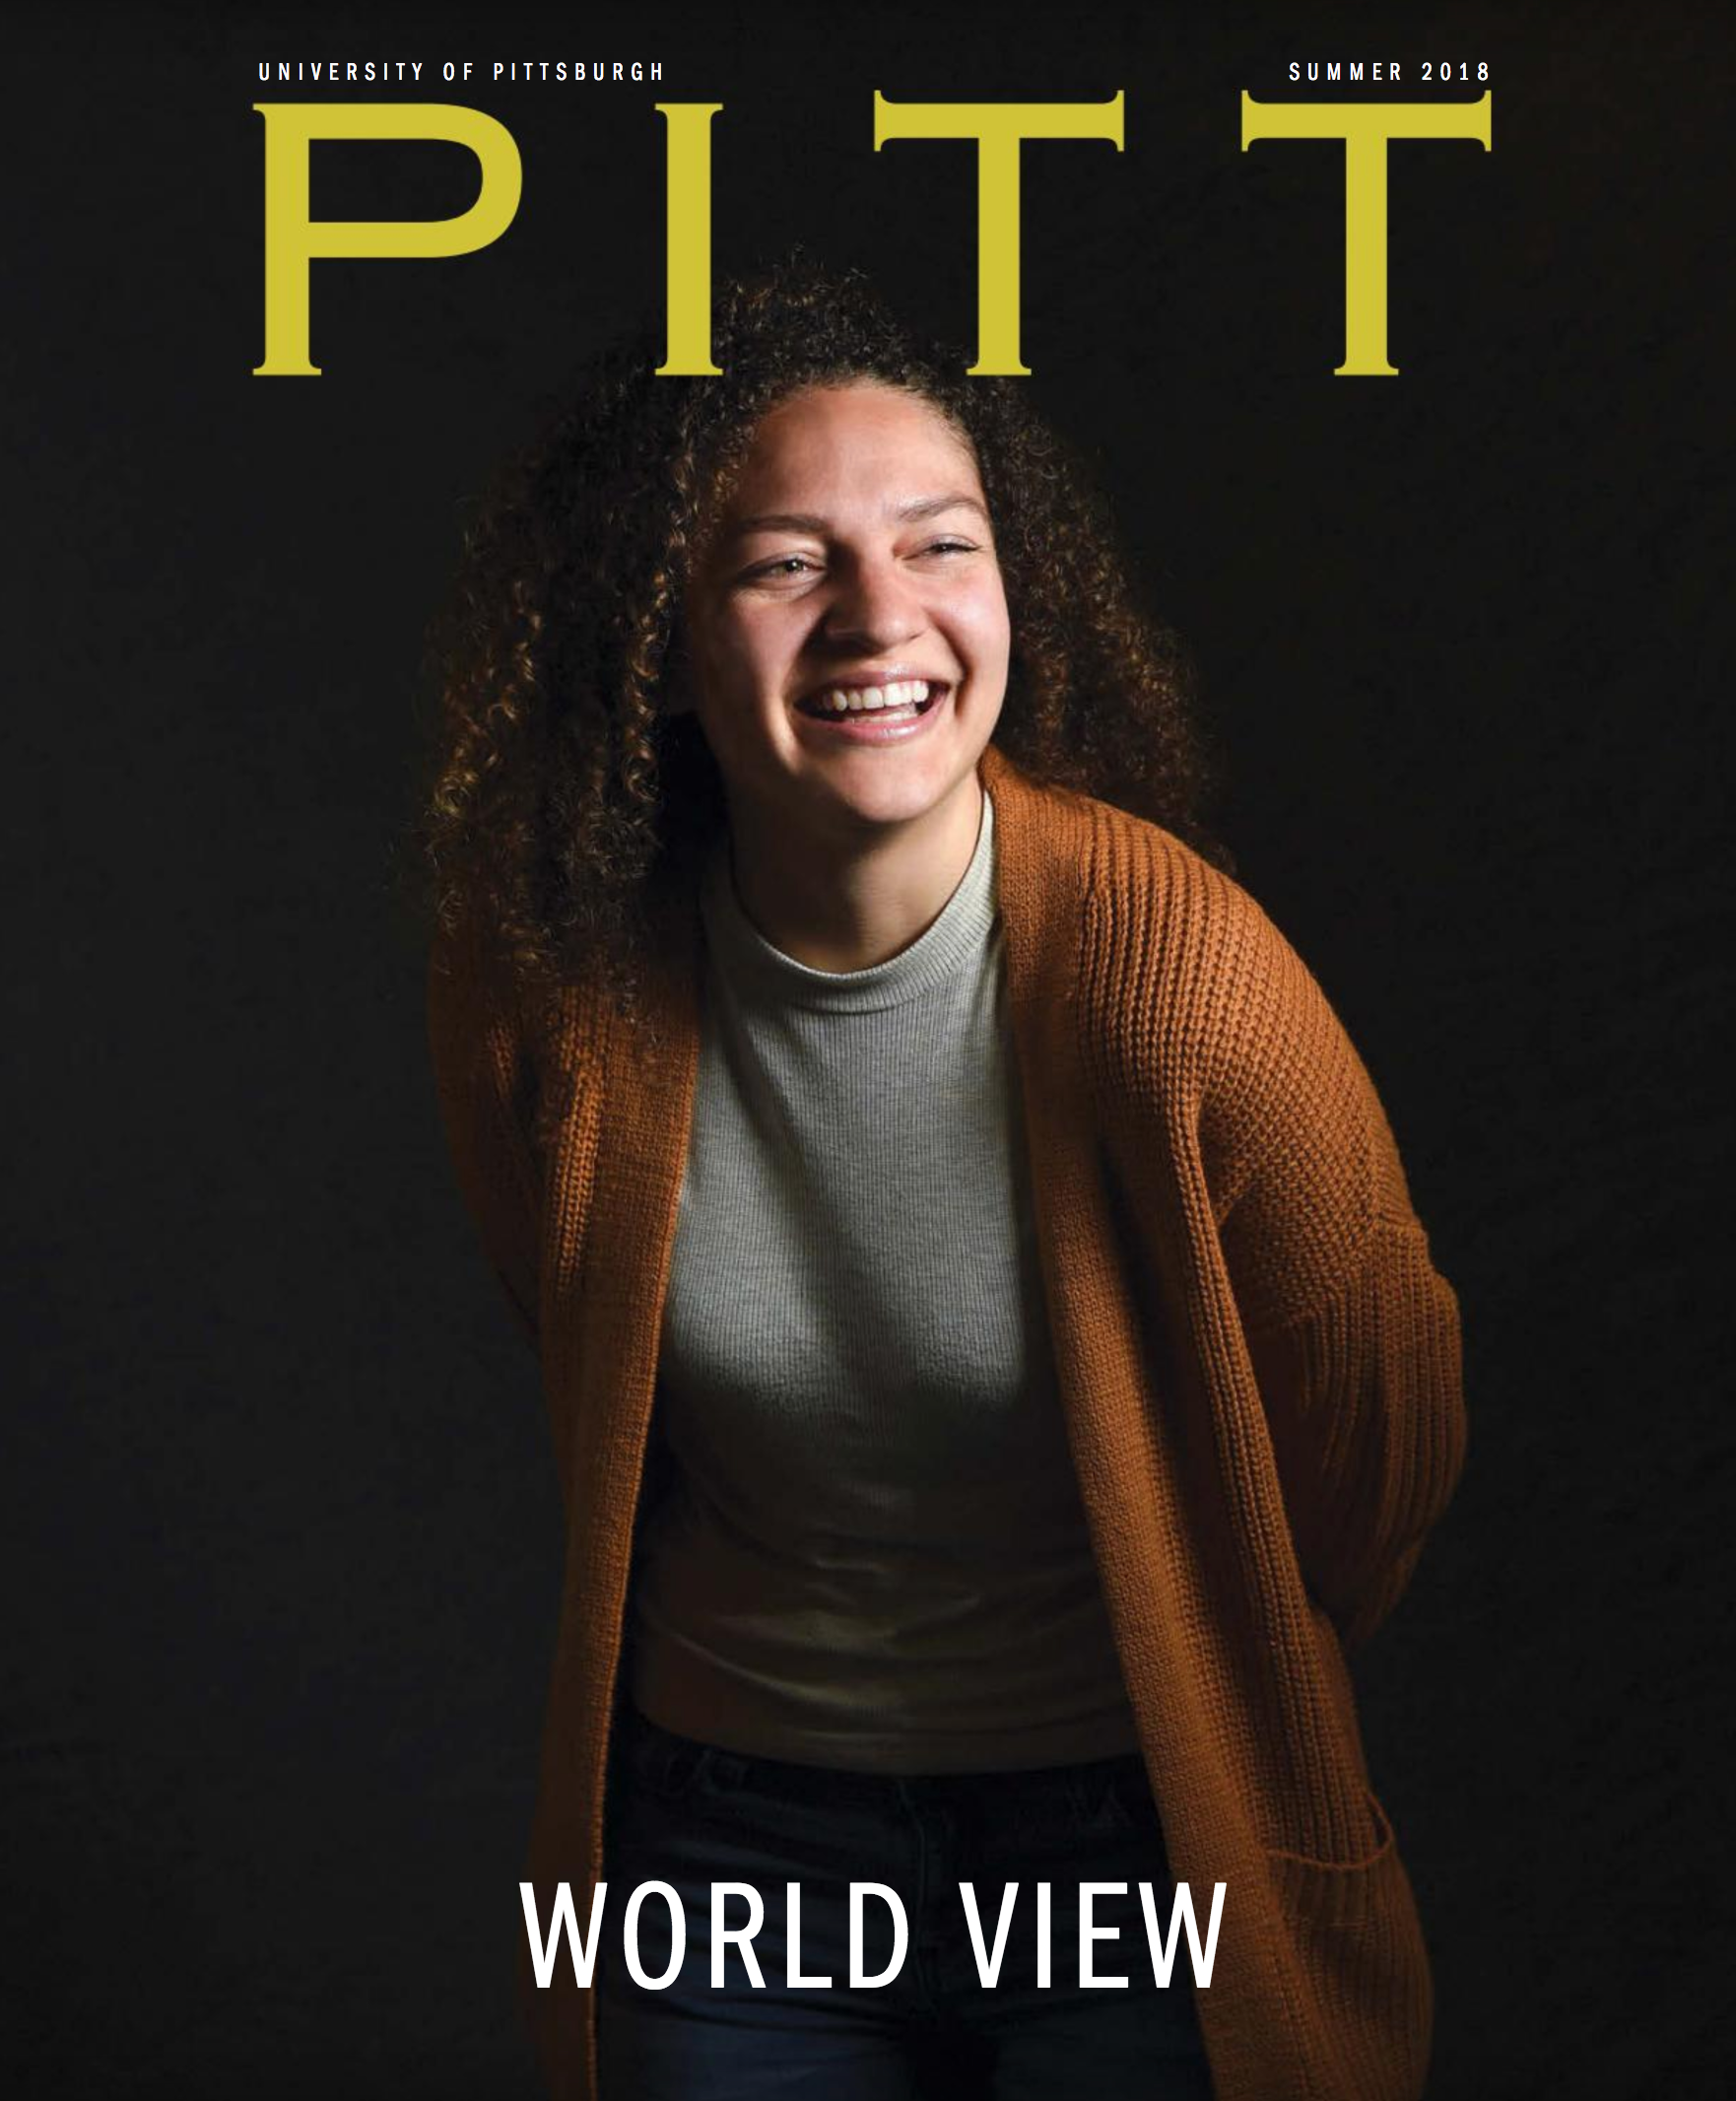 cover image of Pitt Magazine summer 2018 issue